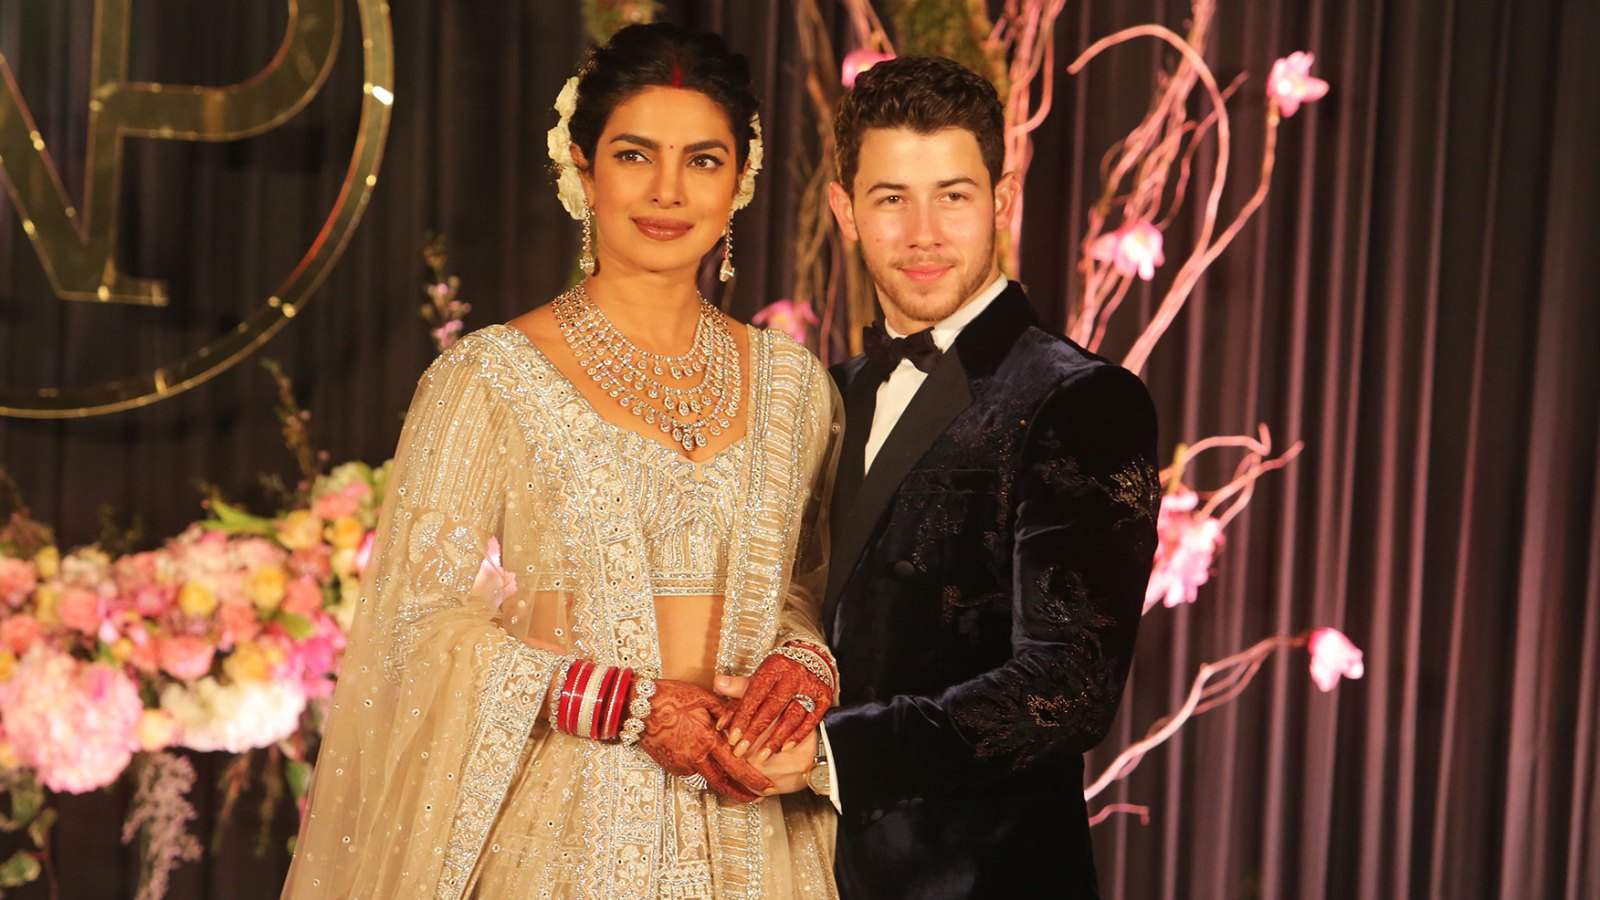 Nick Jonas and Priyanka Chopra Host Another Wedding Reception With North Carolina Celebration